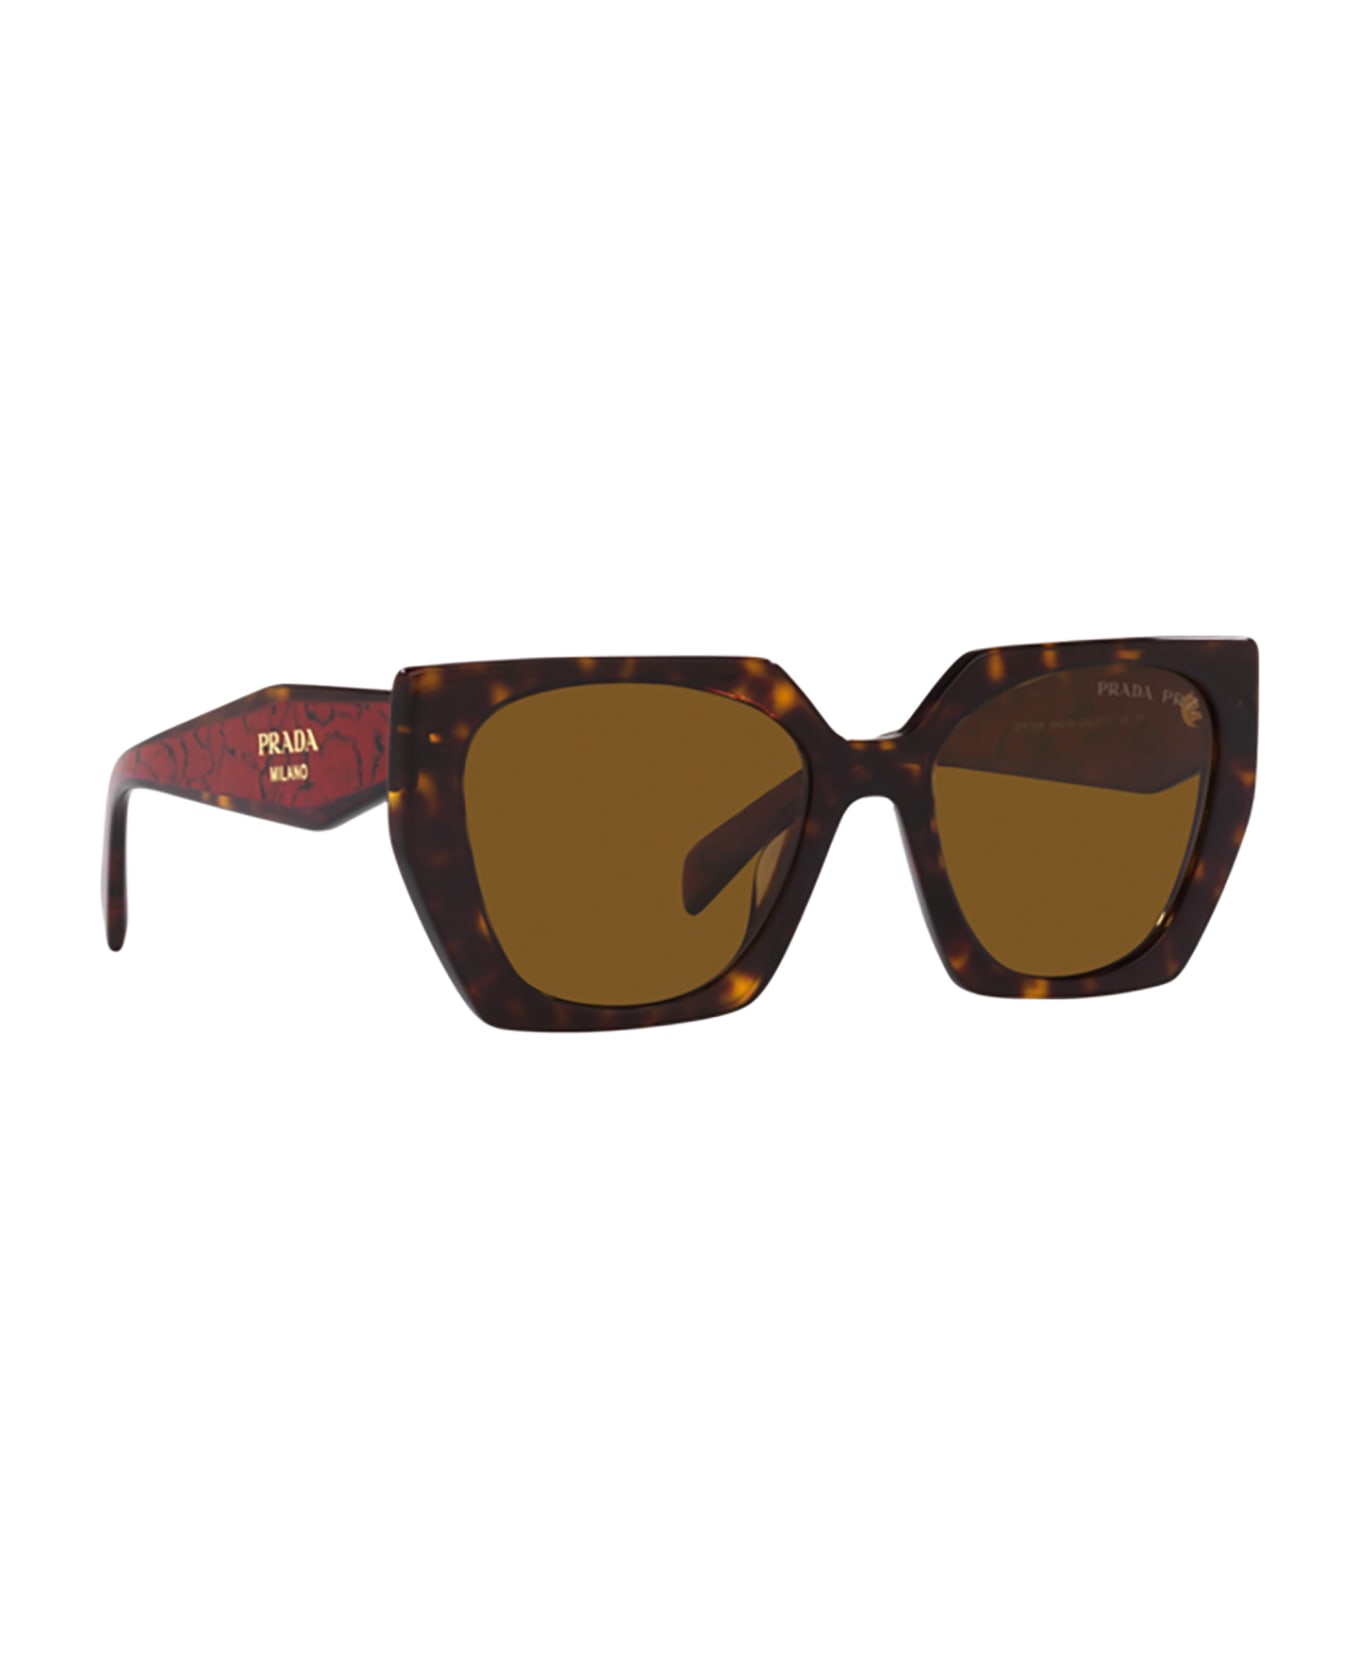 Prada Eyewear Pr 15ws Tortoise Sunglasses - Tortoise